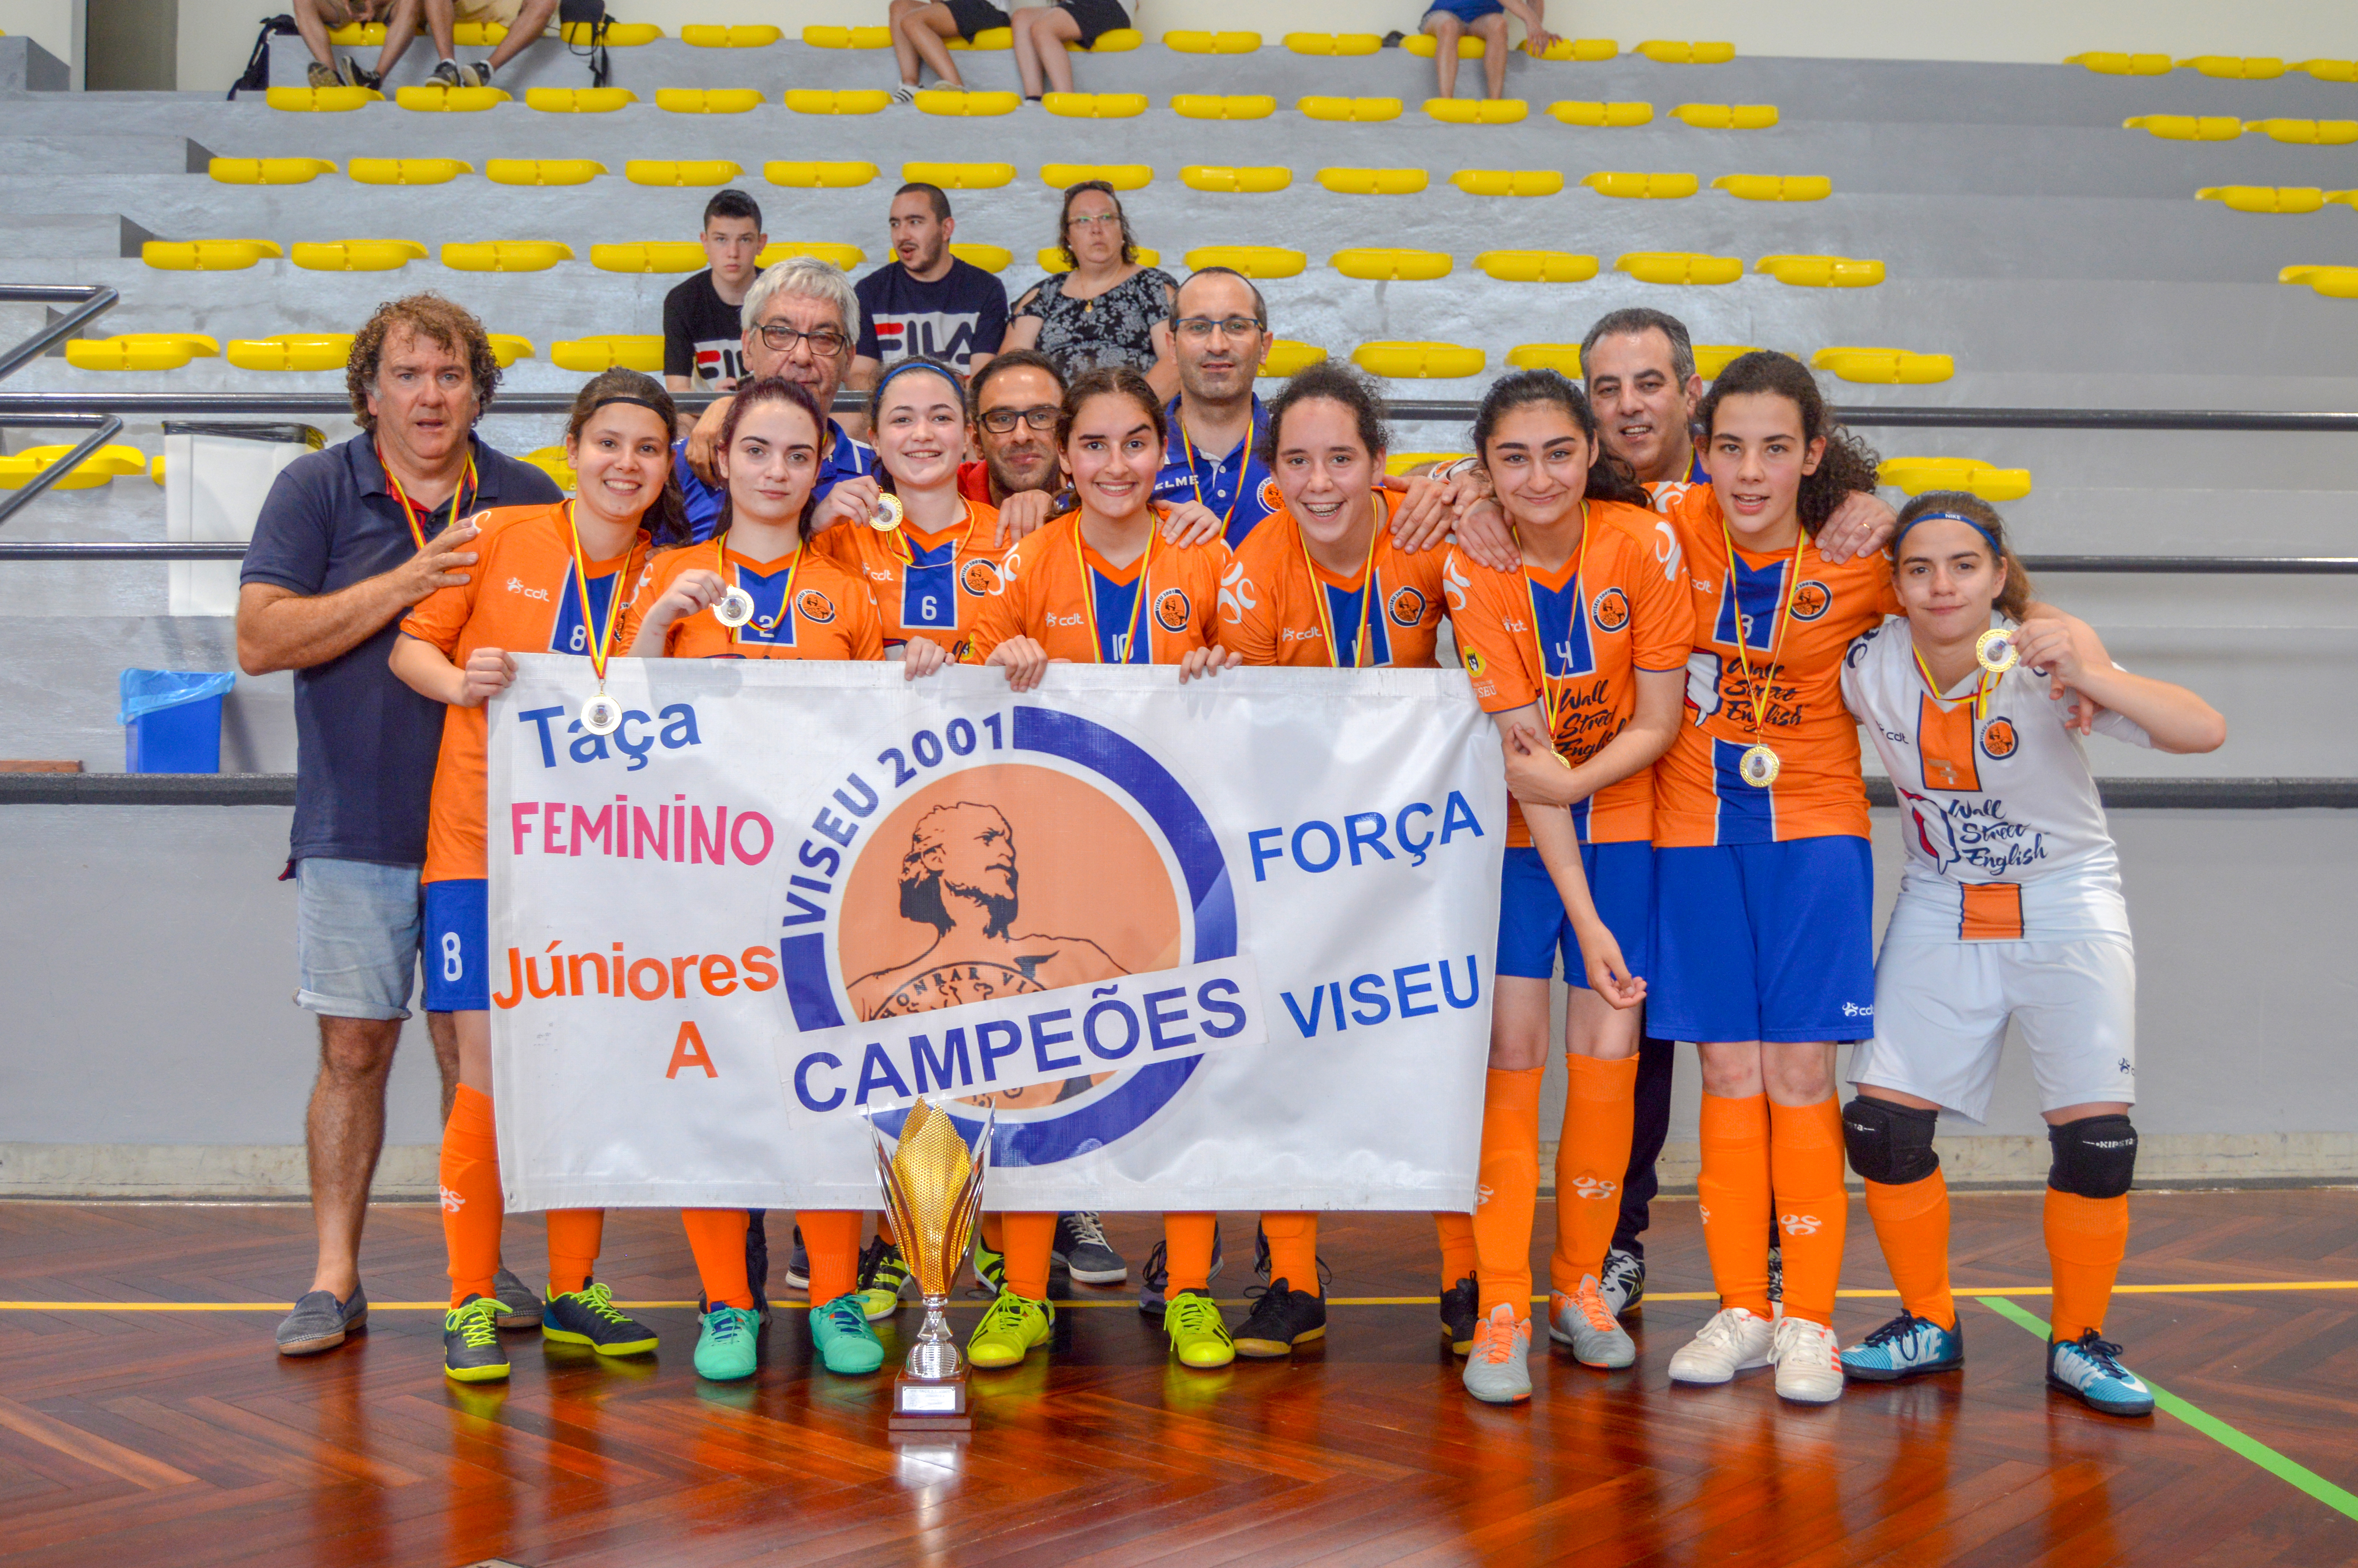 Viseu 2001 vence Taça de Futsal Feminino de Juniores A